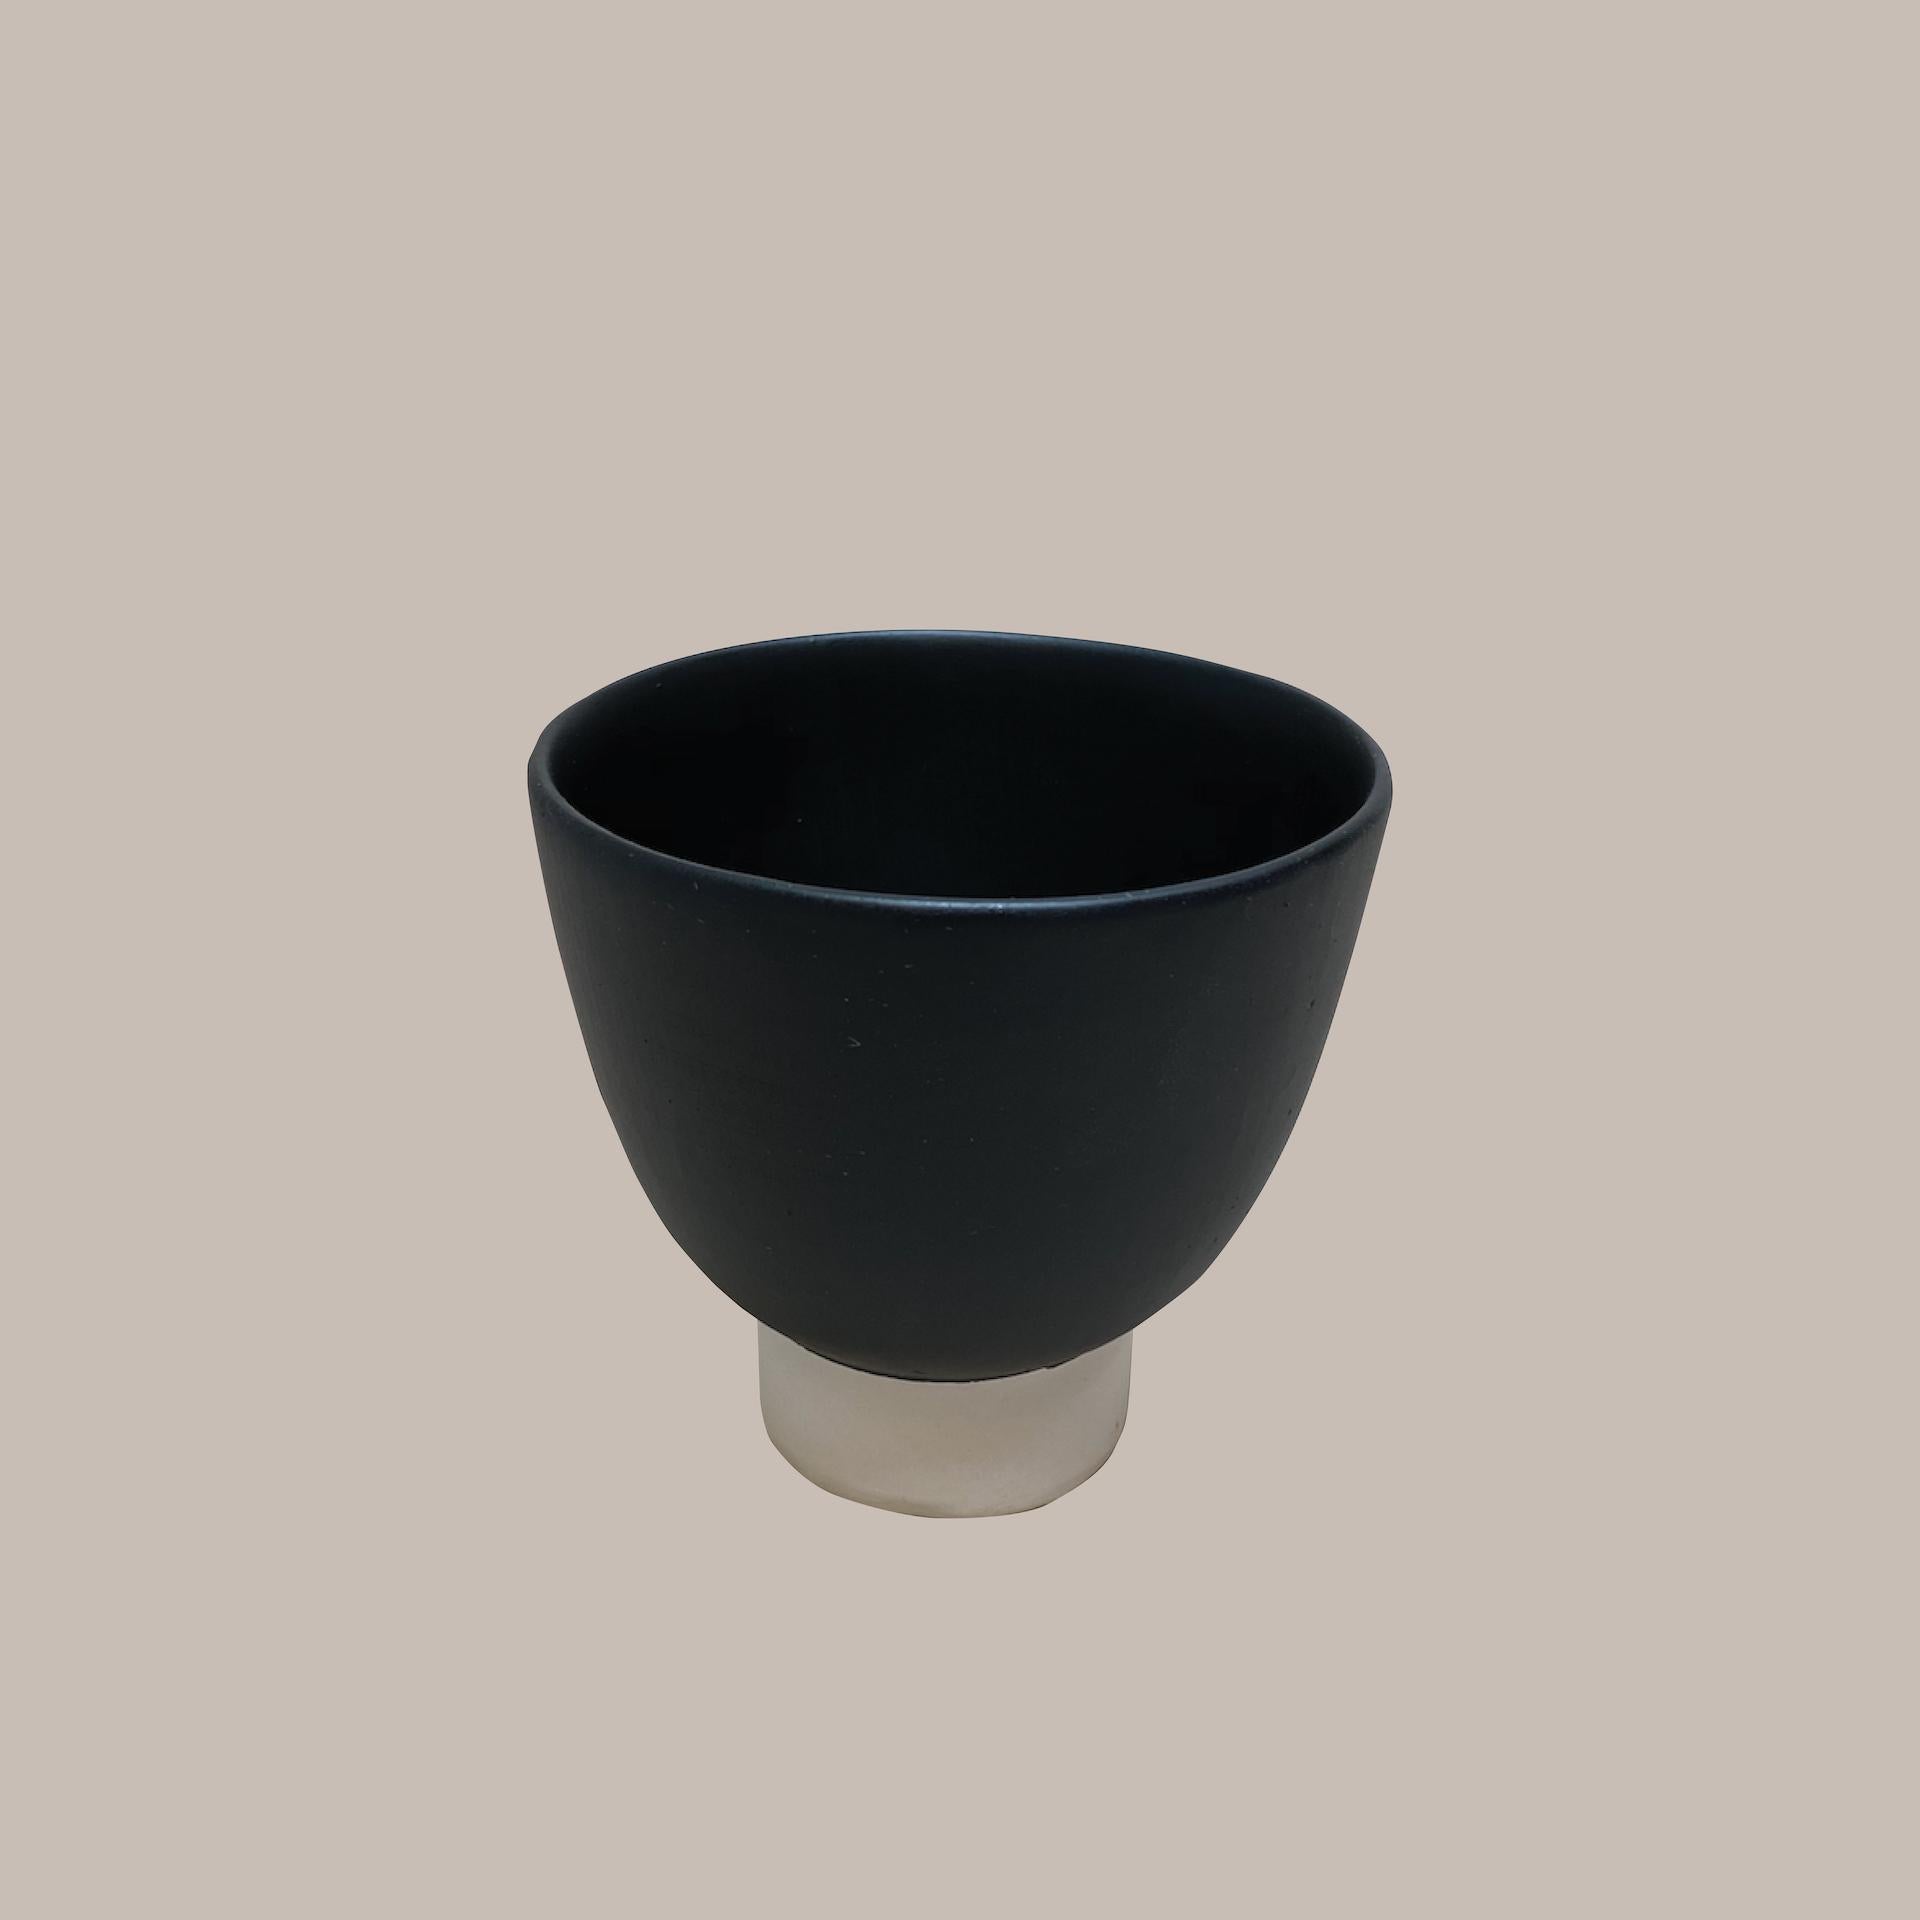 Ott Another Paradigmatic Handmade Ceramic Vase by Studio Yoon Seok-Hyeon For Sale 1